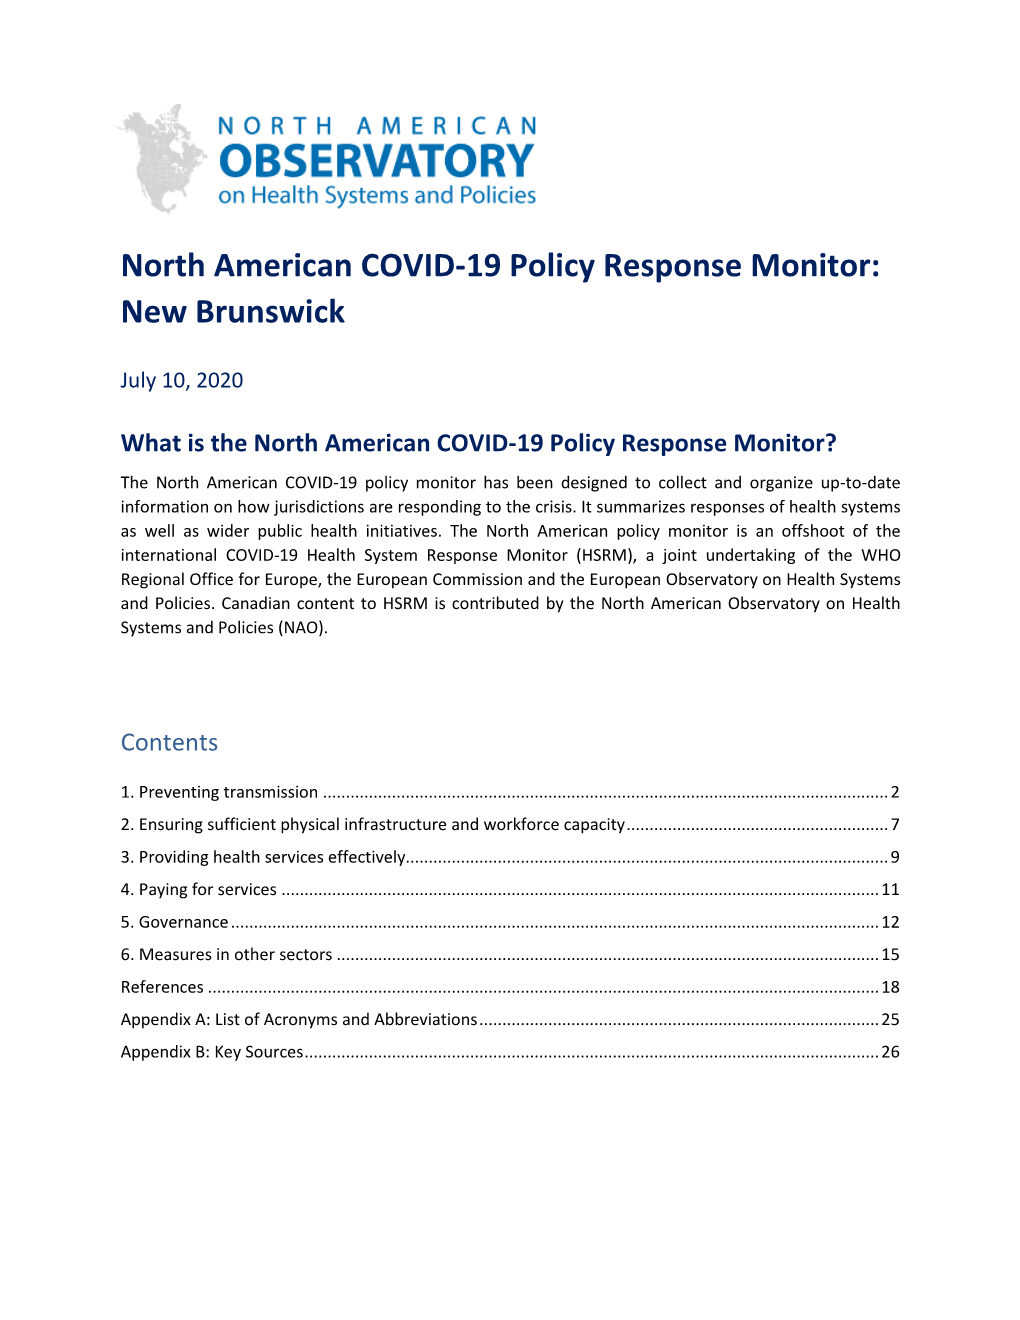 North American COVID-19 Policy Response Monitor: New Brunswick